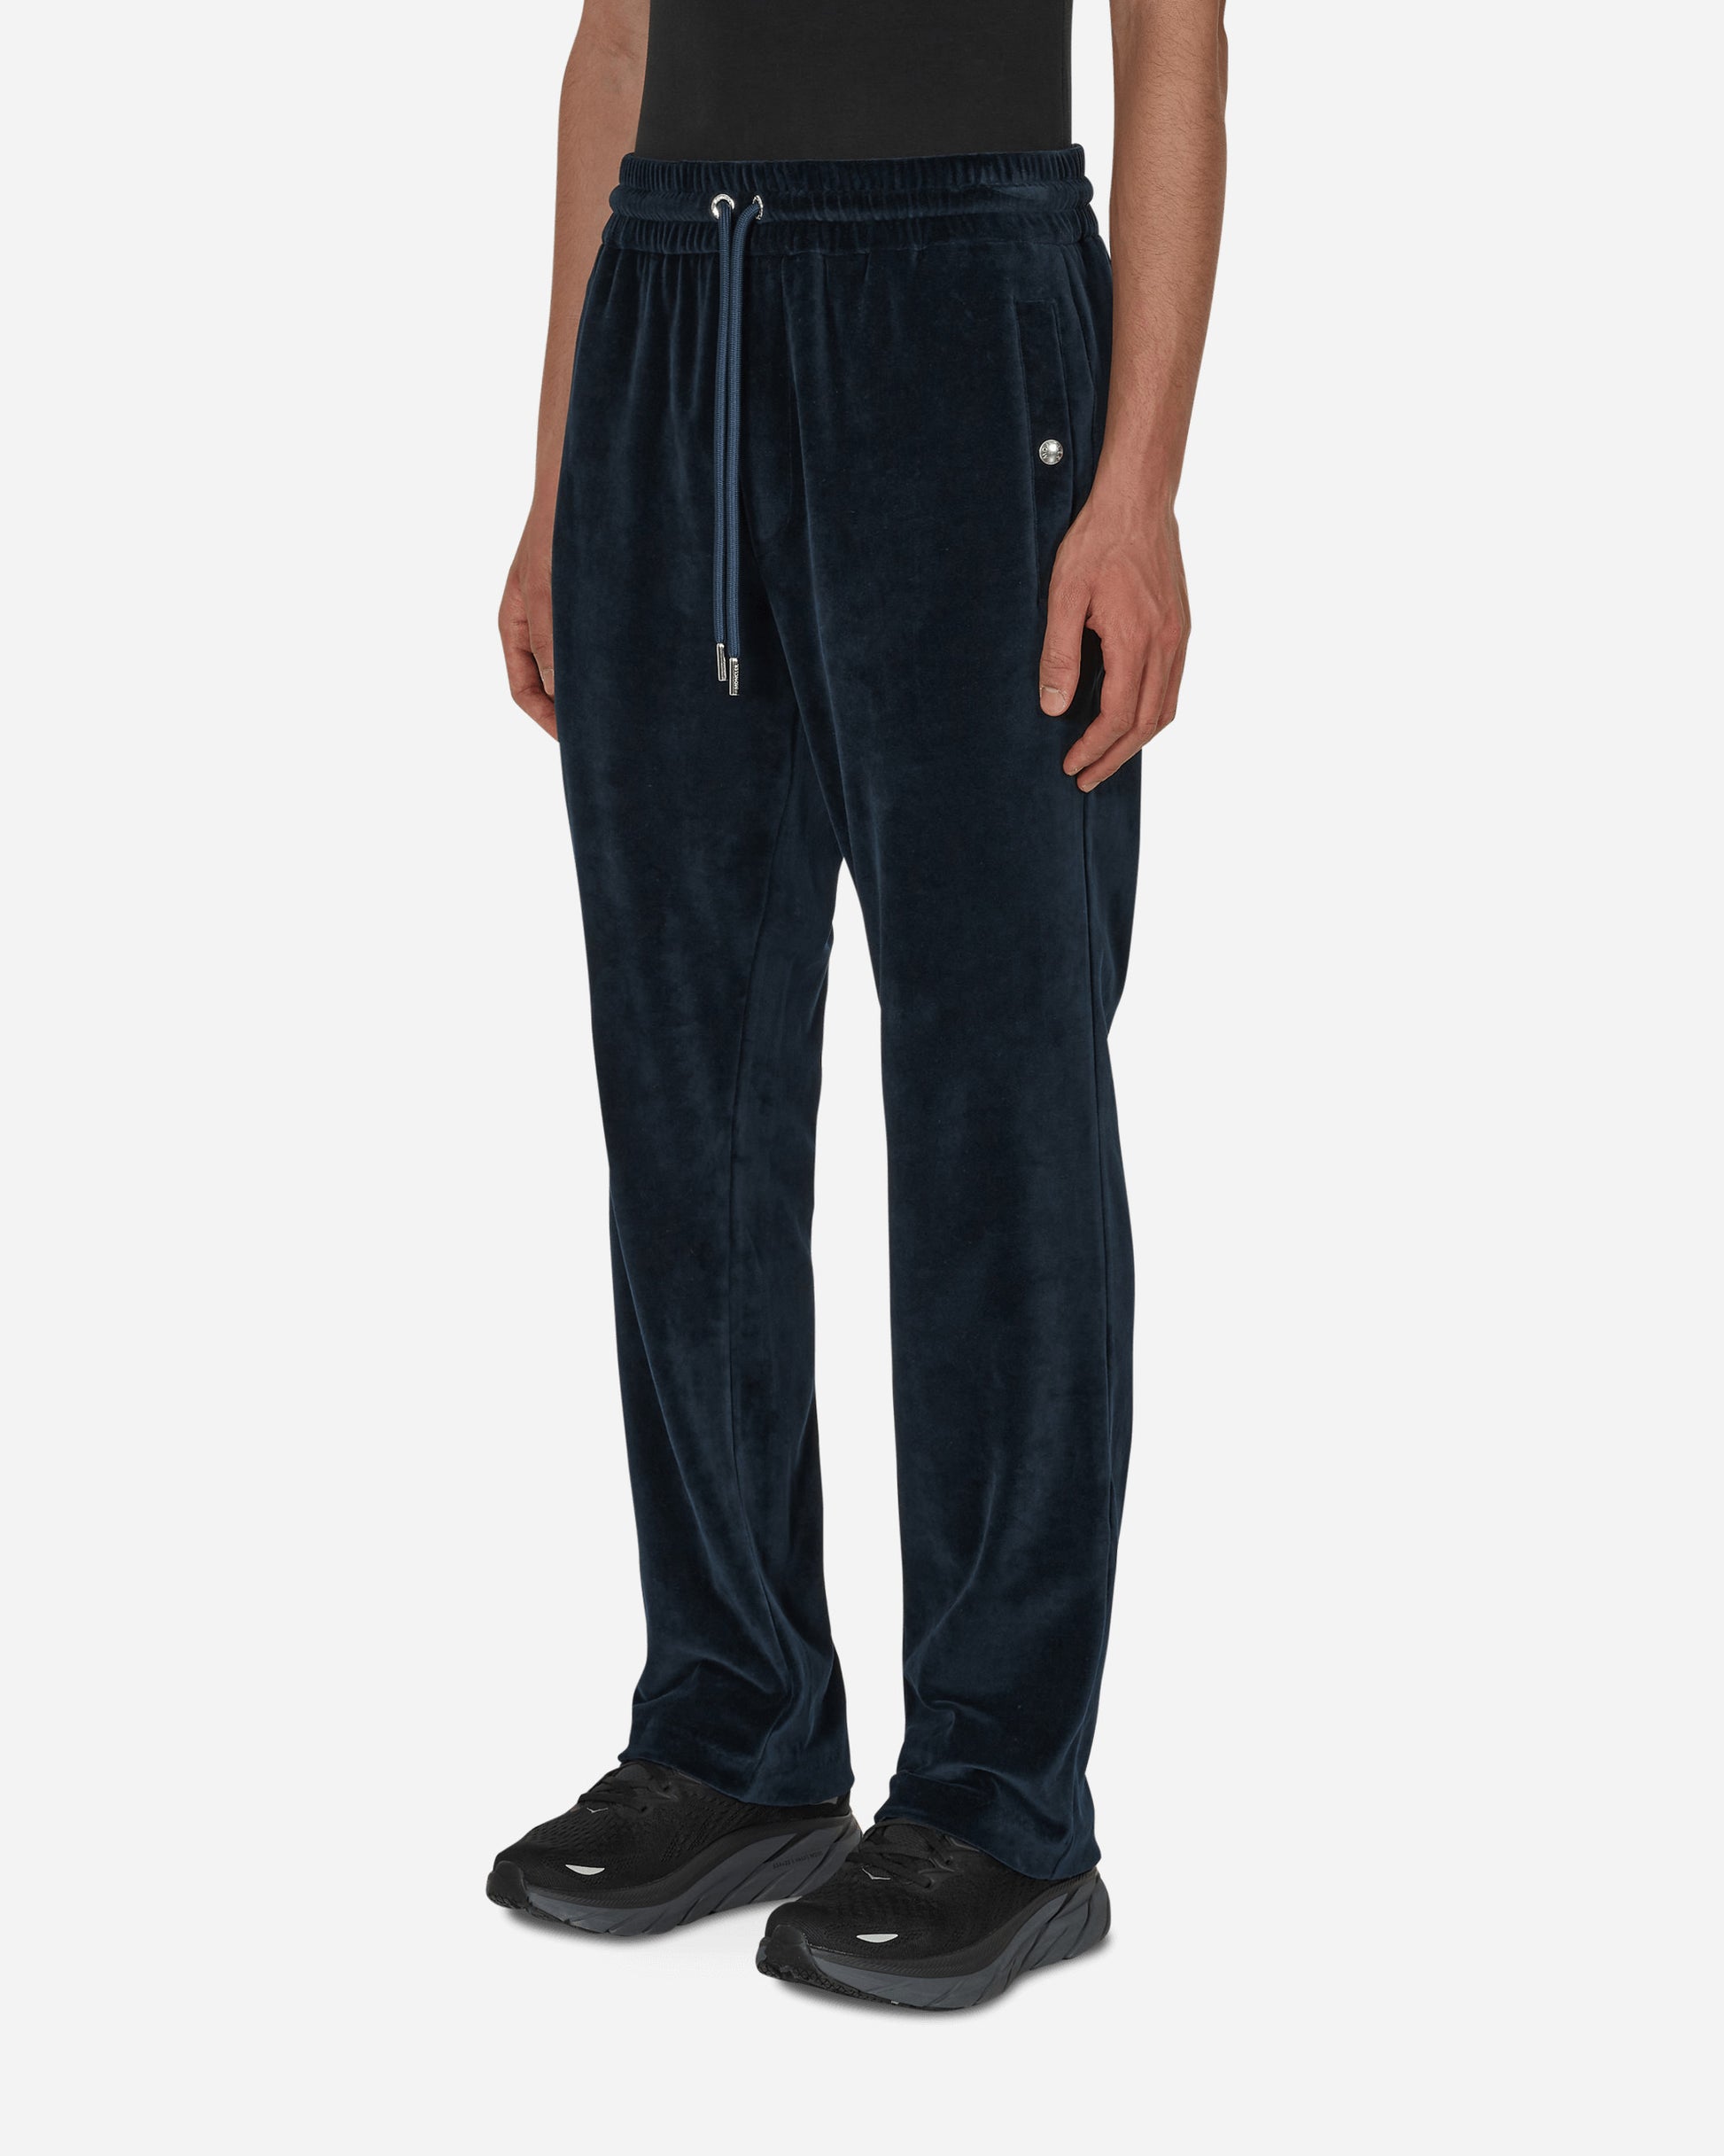 Moncler Sweat Bottom Navy Pants Sweatpants H20918H00009 778